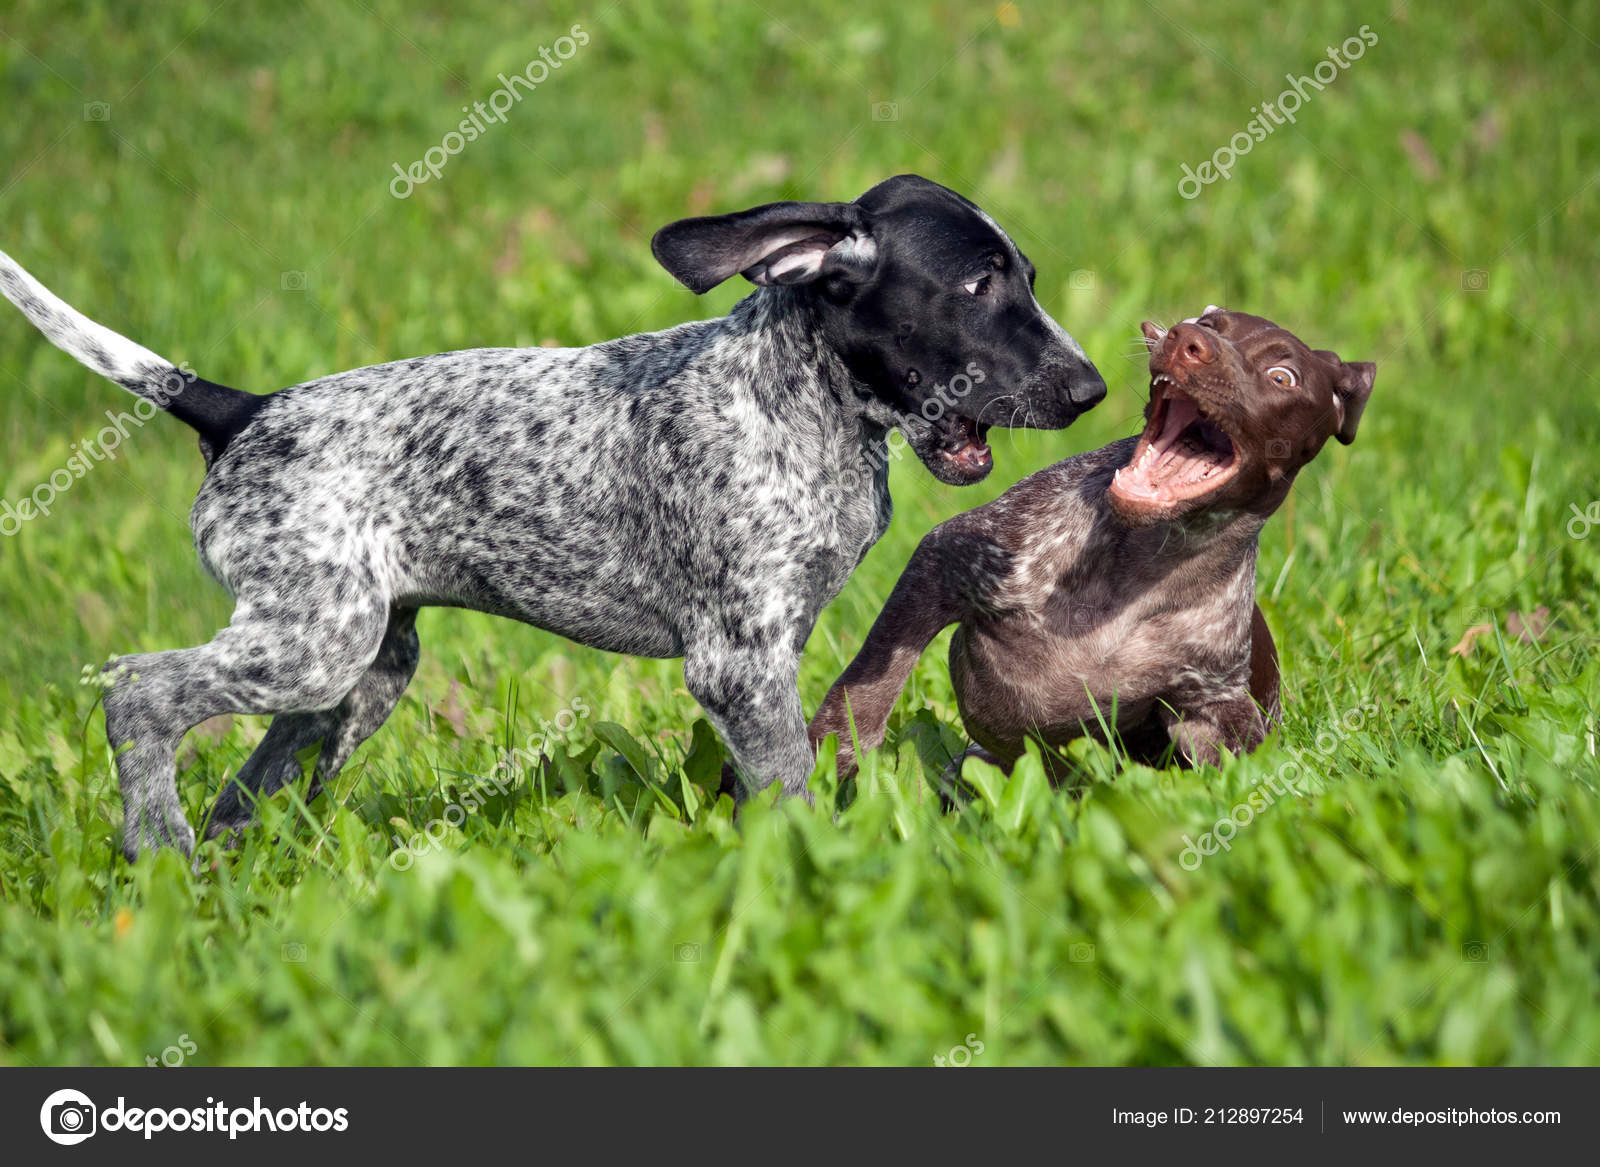 German Shorthaired Pointer Kurtshaar Two Spotted Little Puppy Black Brown Stock Photo C Evaheaven2018 212897254